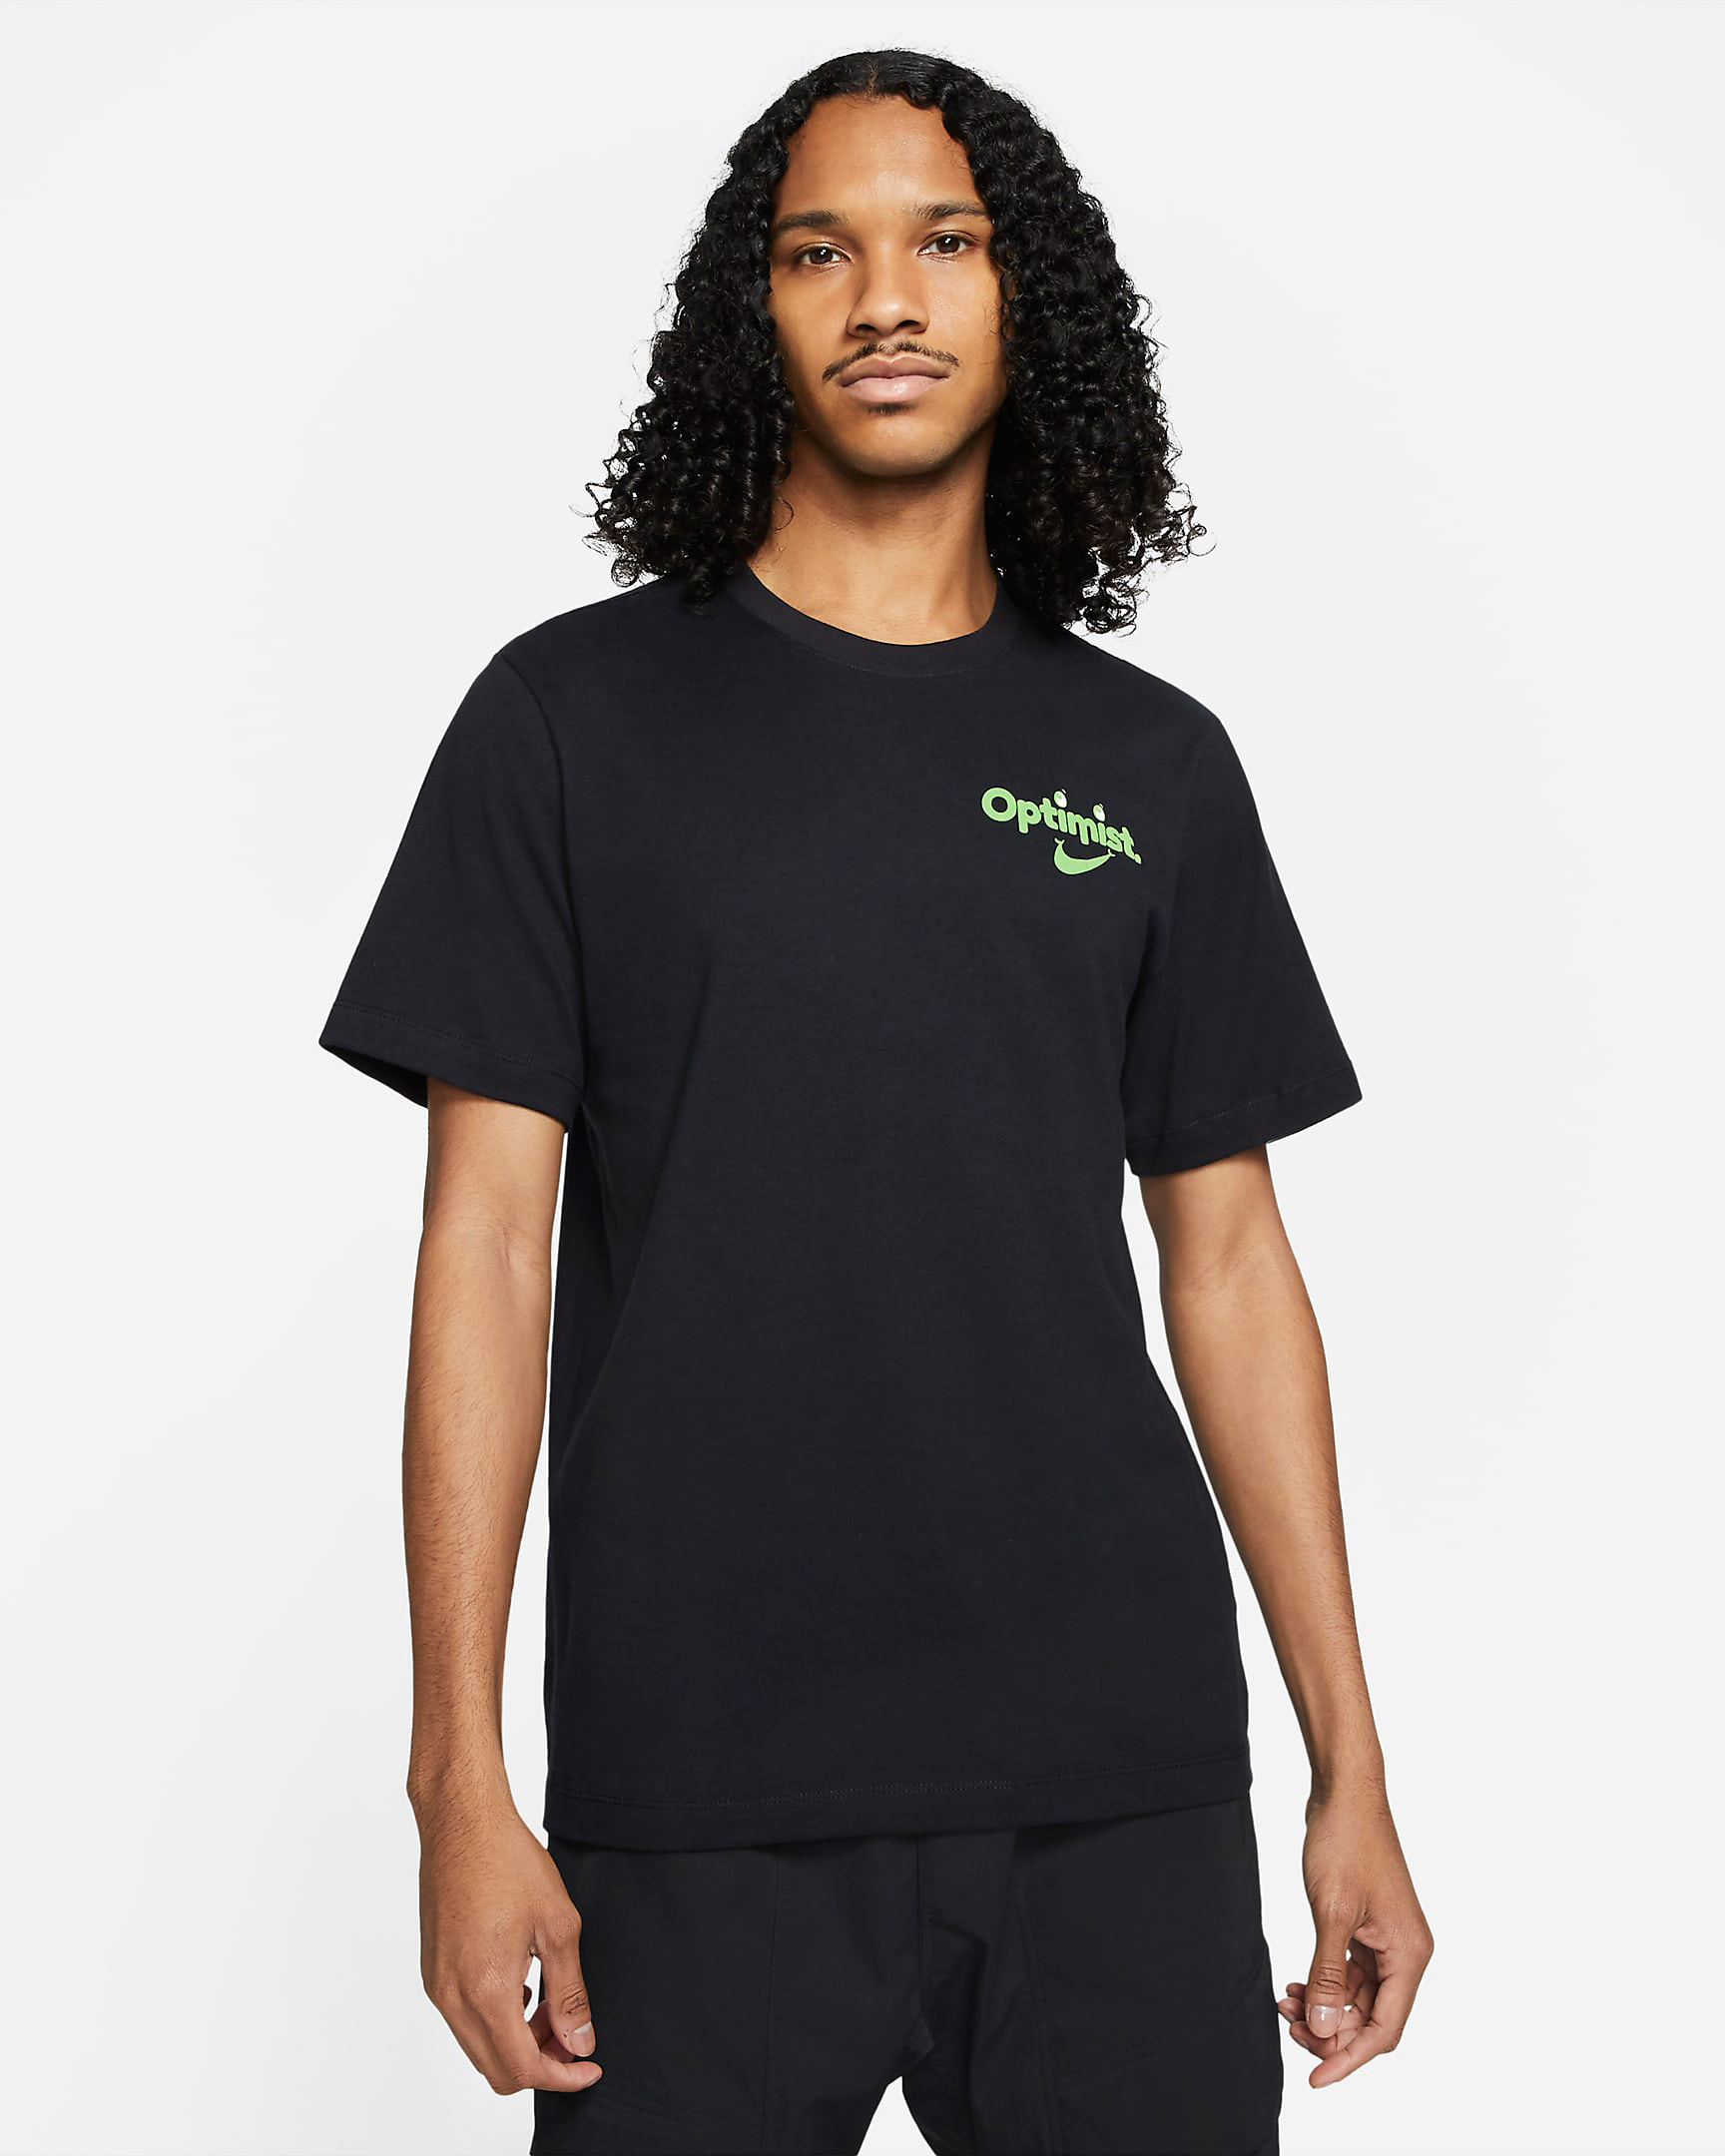 nike-sportswear-optimist-shirt-black-green-1